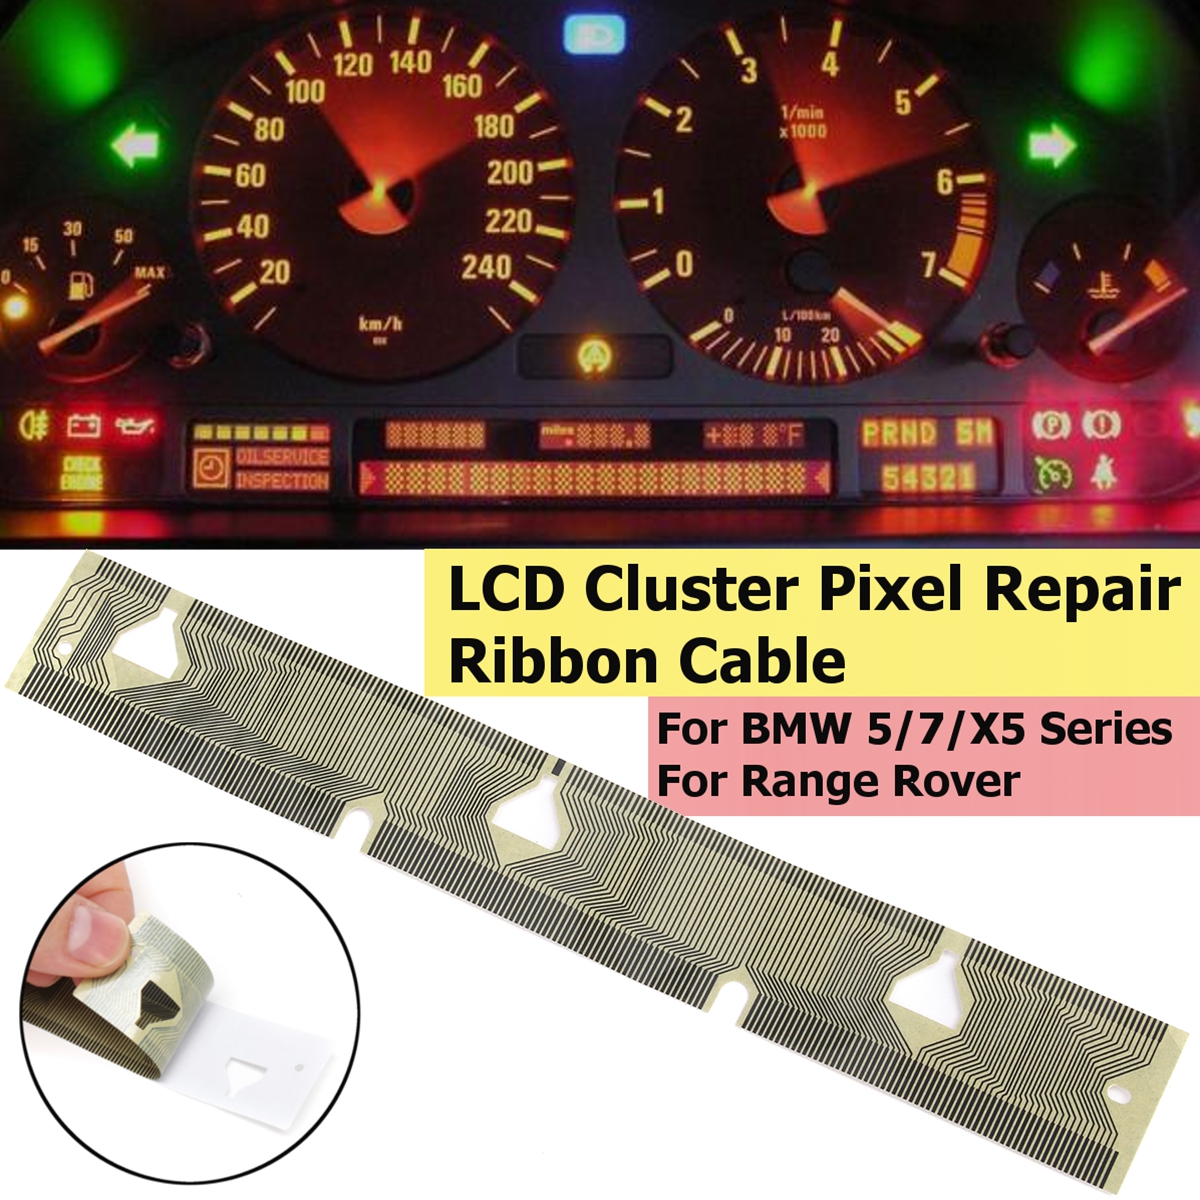 Instrument Cluster Pixel Repair Ribbon Cable For BMW E38 E39 E53 X5 Range Rover